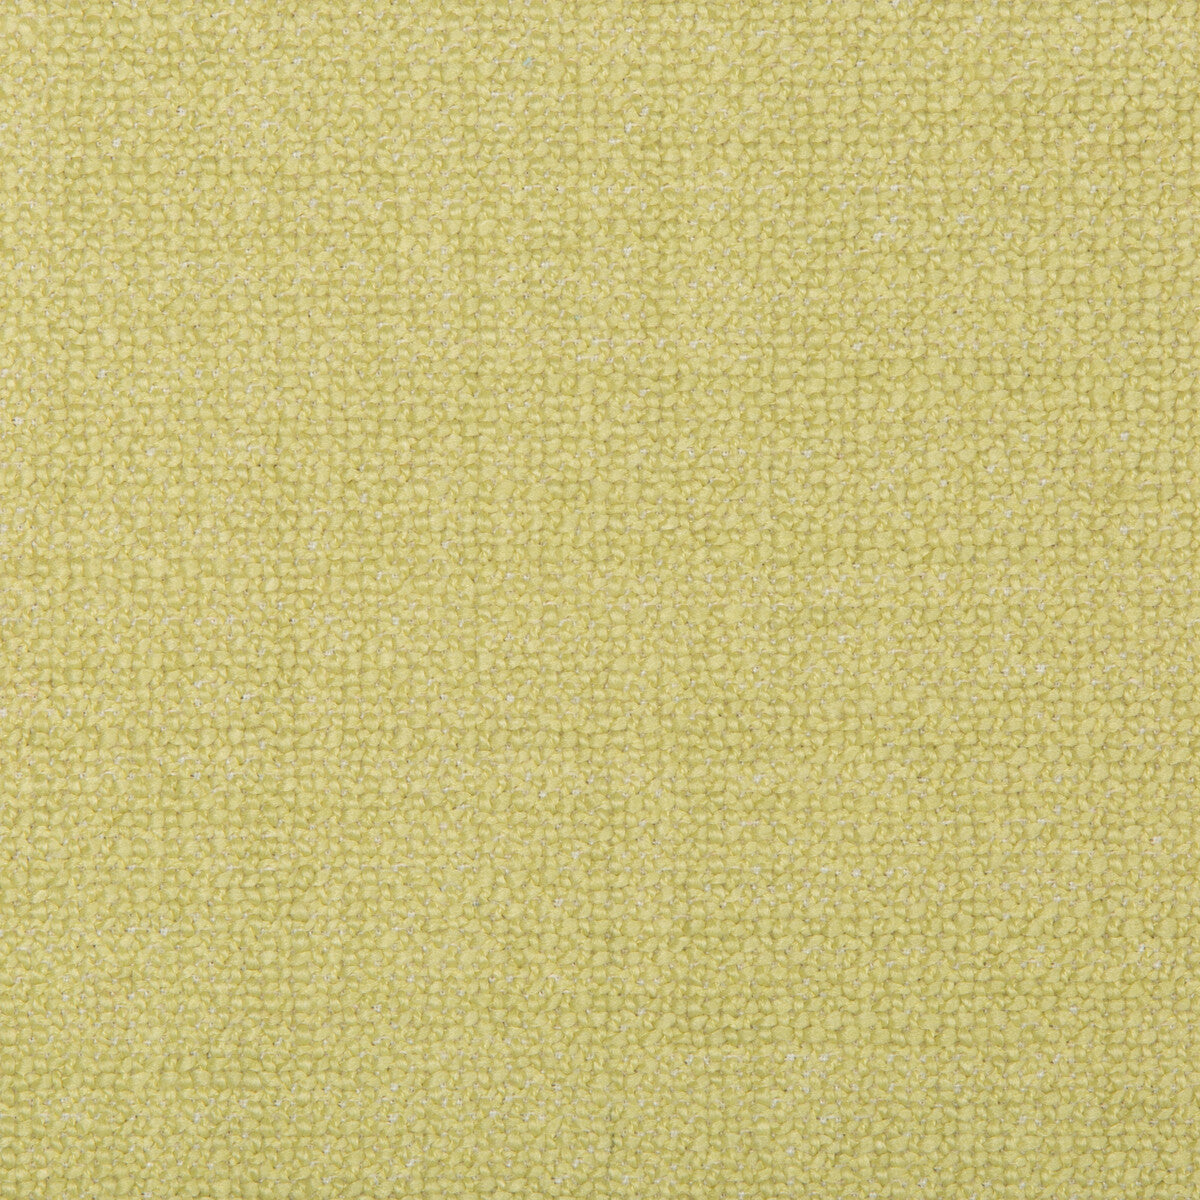 Kravet Smart fabric in 35379-123 color - pattern 35379.123.0 - by Kravet Smart in the Performance Kravetarmor collection